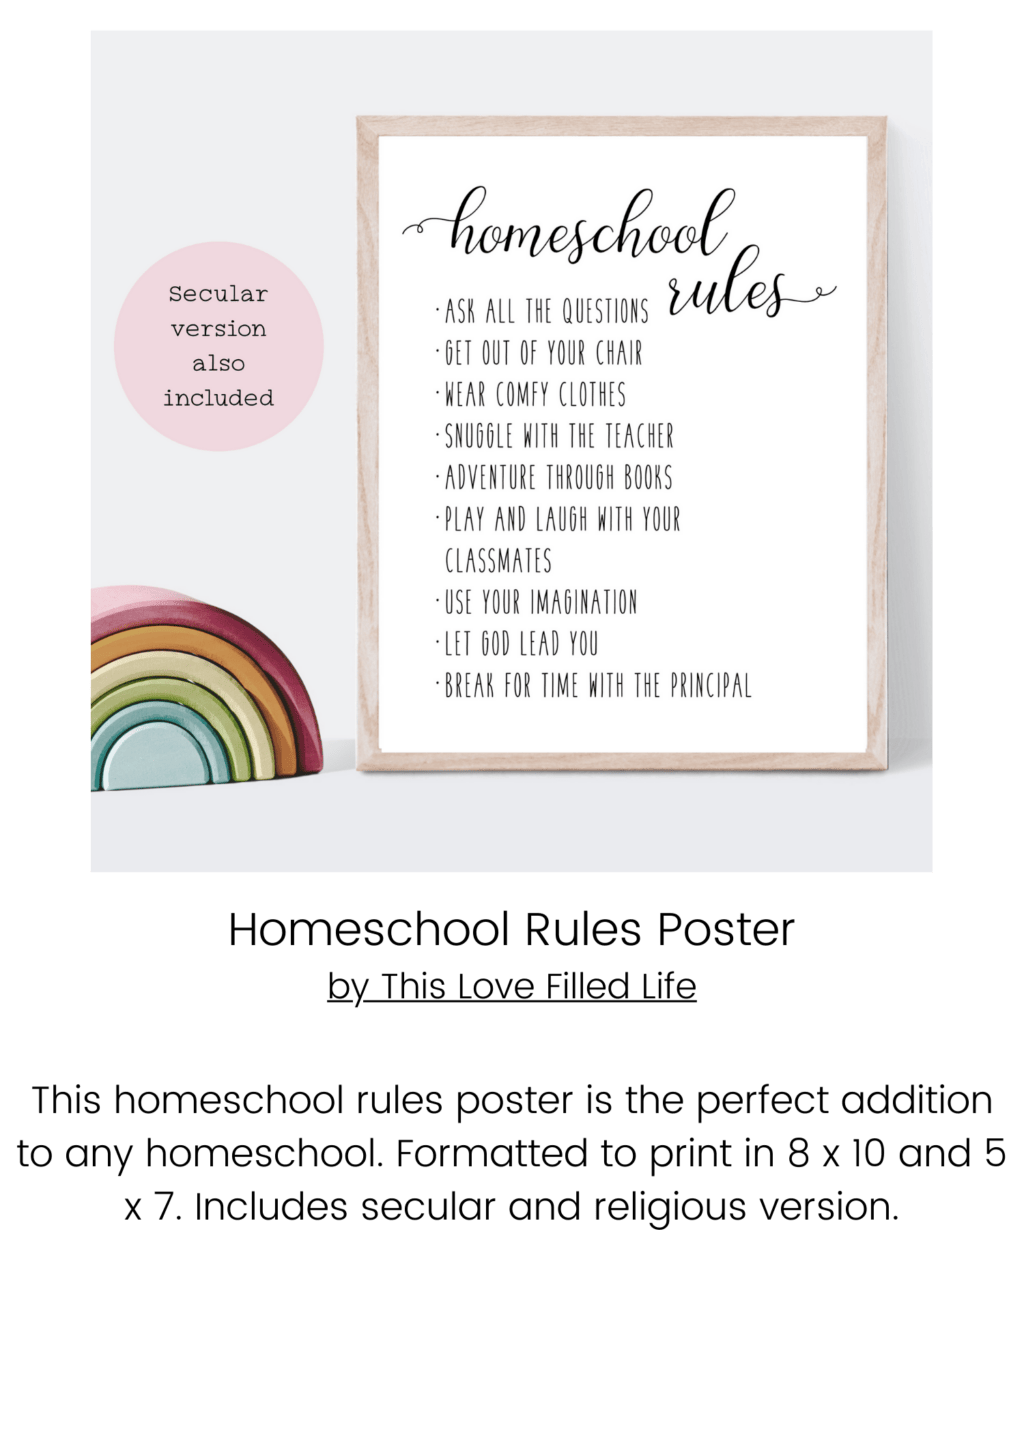 Homeschool Rules Poster Info